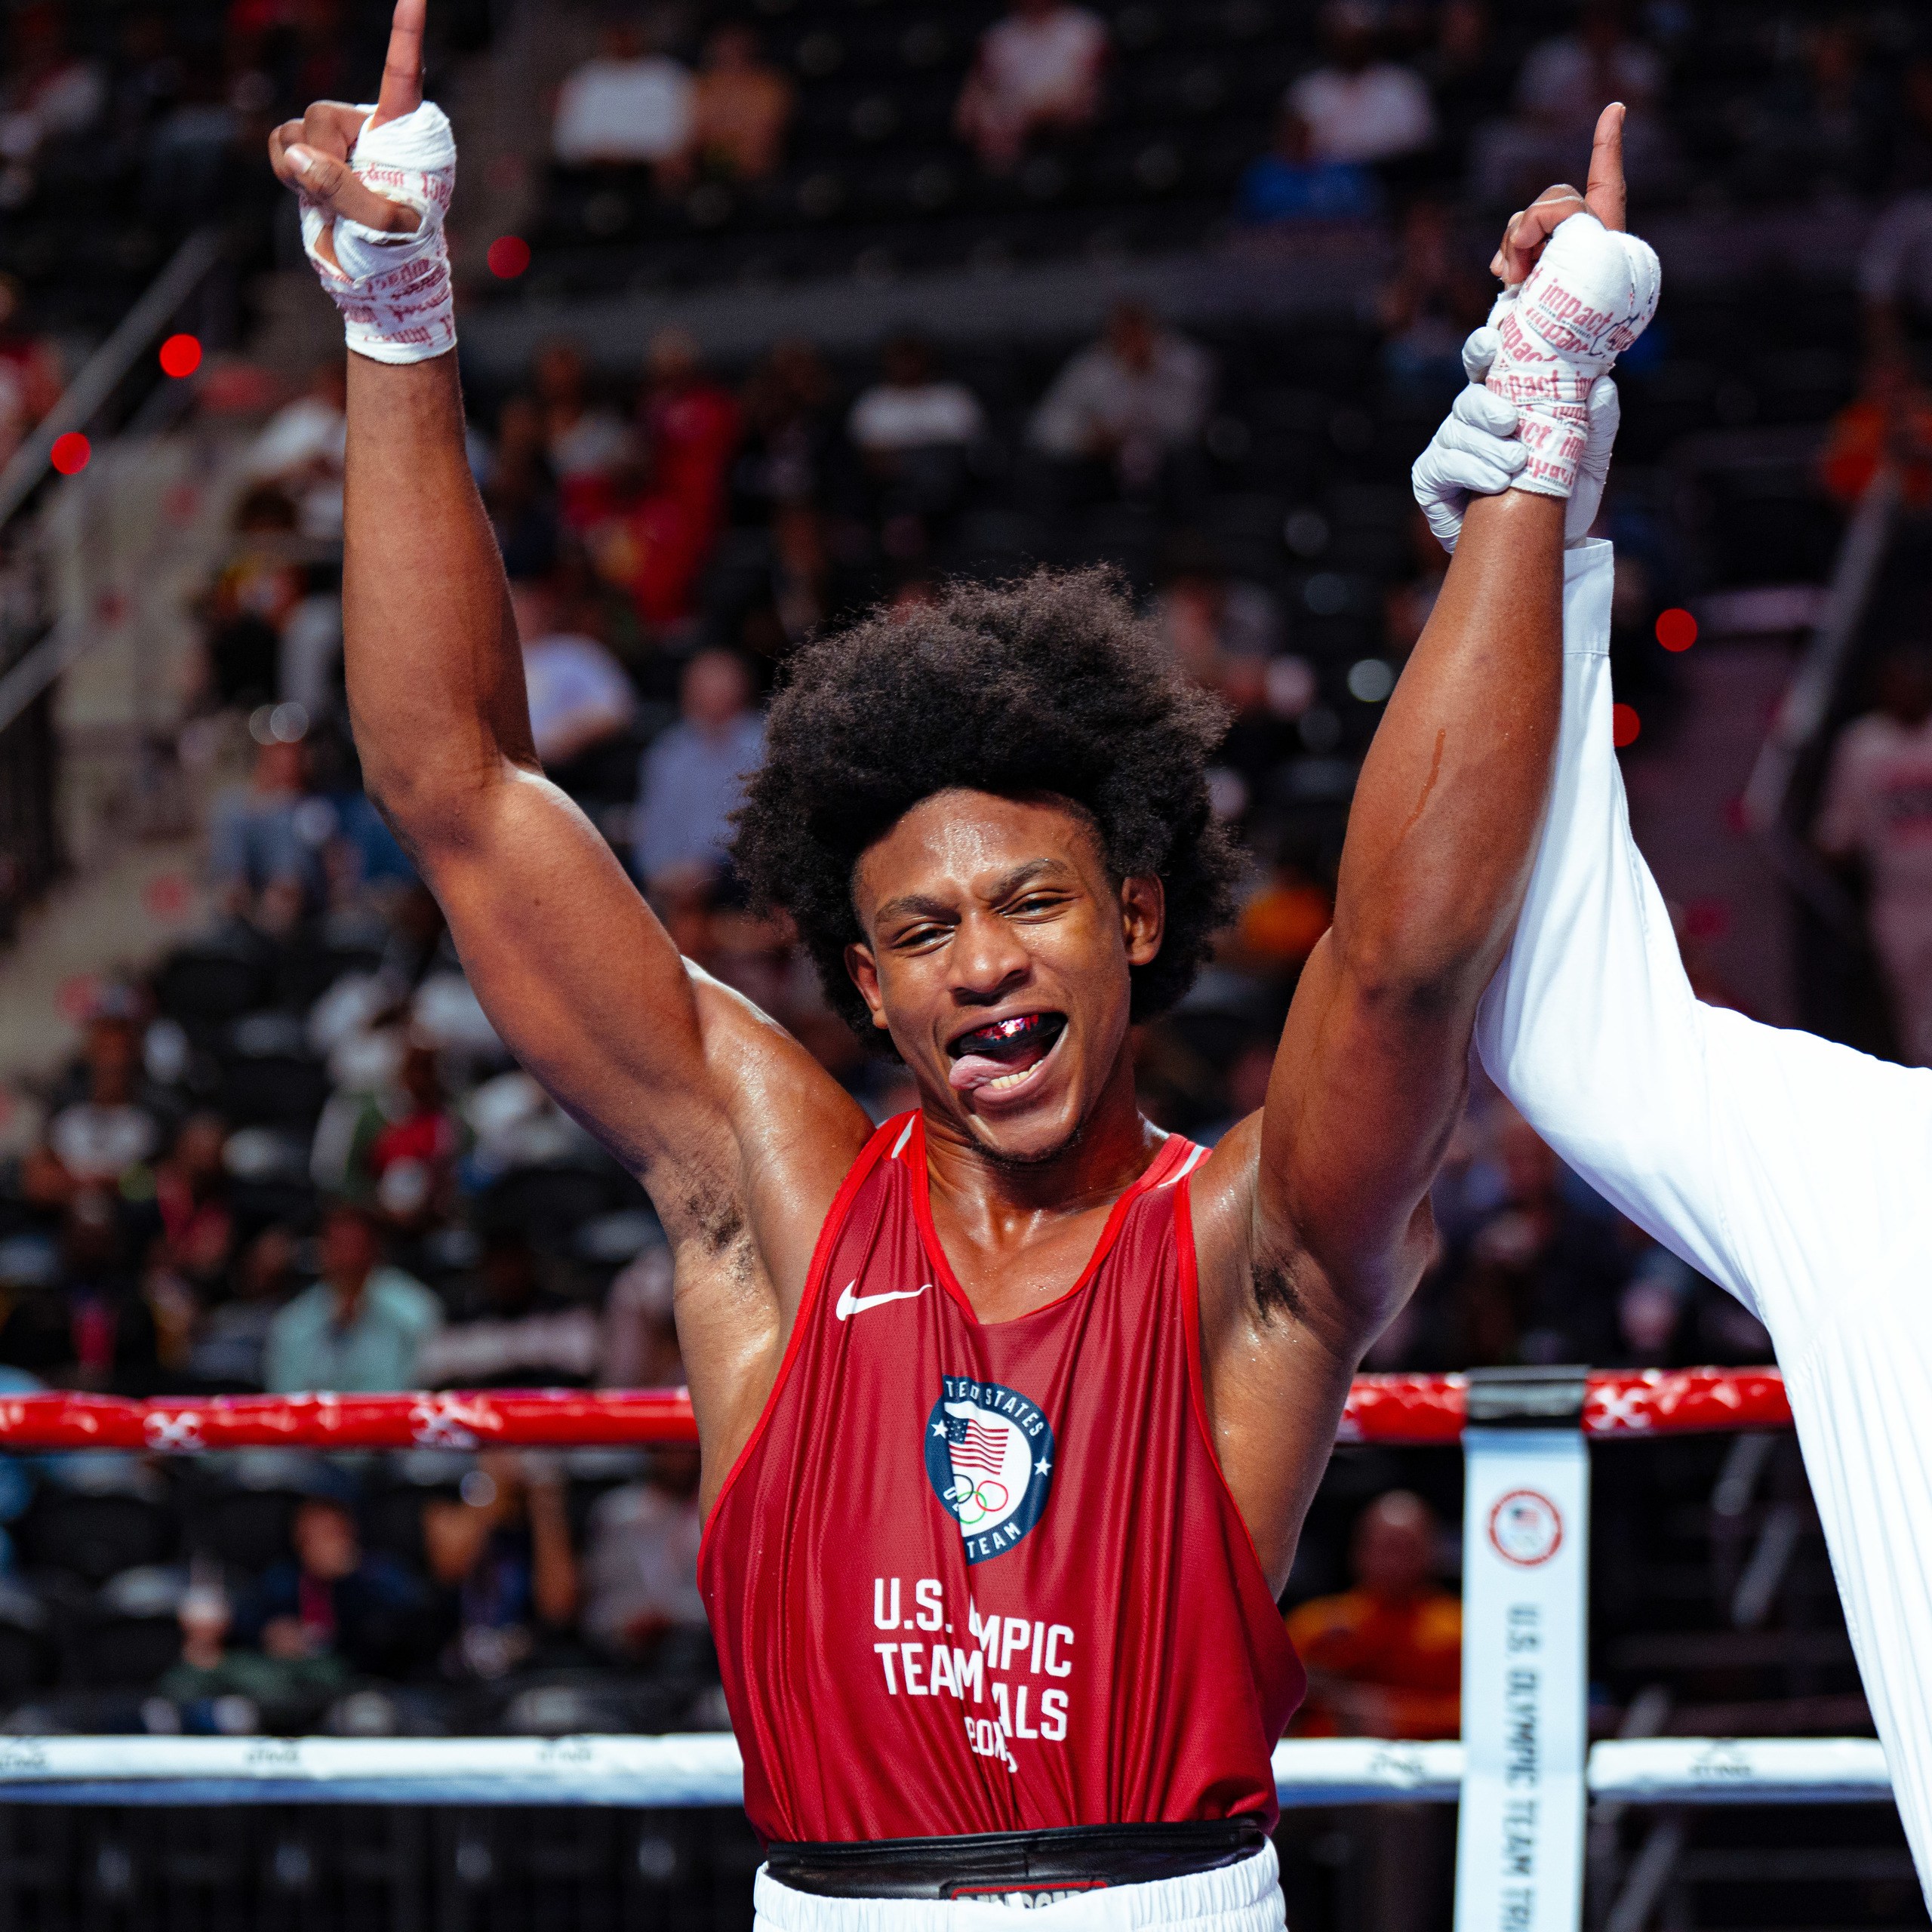 A boxer raises his arms in celebration